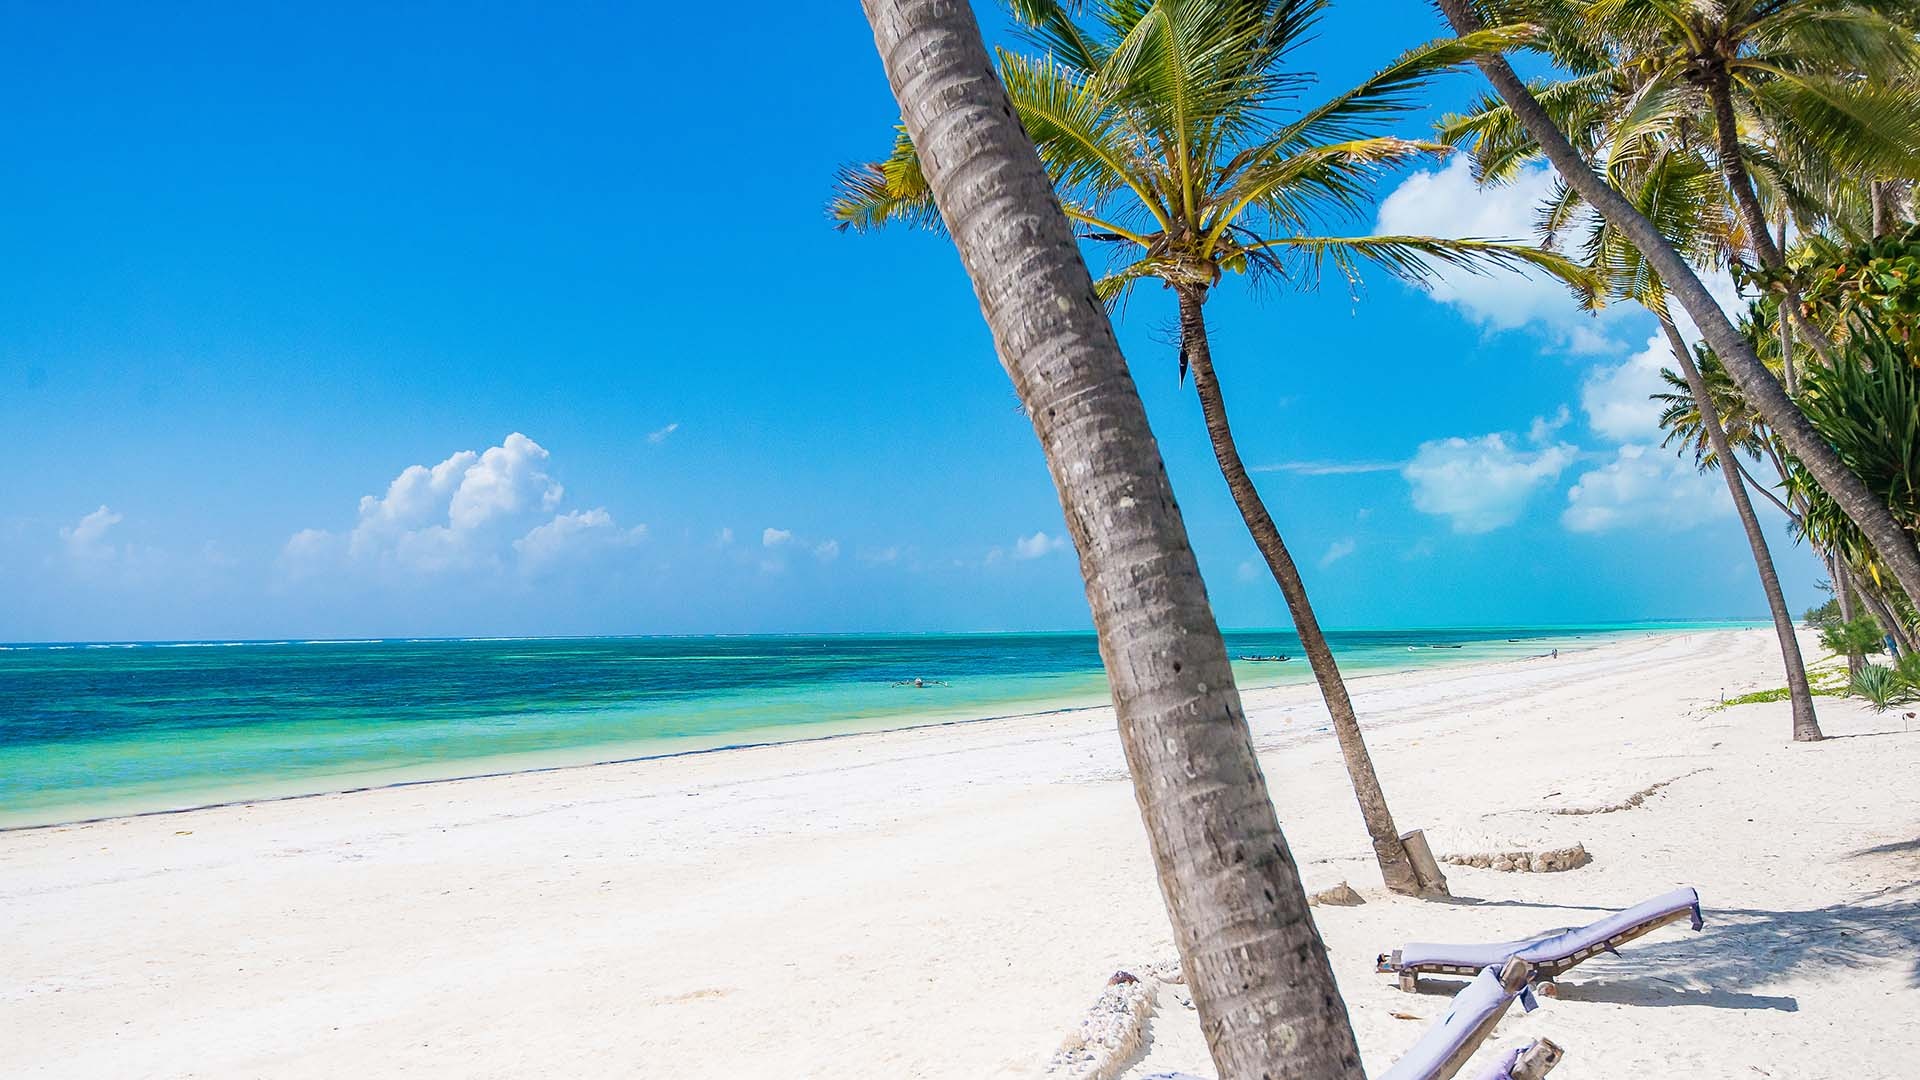 Zanzibar Travels, Stunning beaches, Snorkeling adventures, Relaxation bliss, 1920x1080 Full HD Desktop